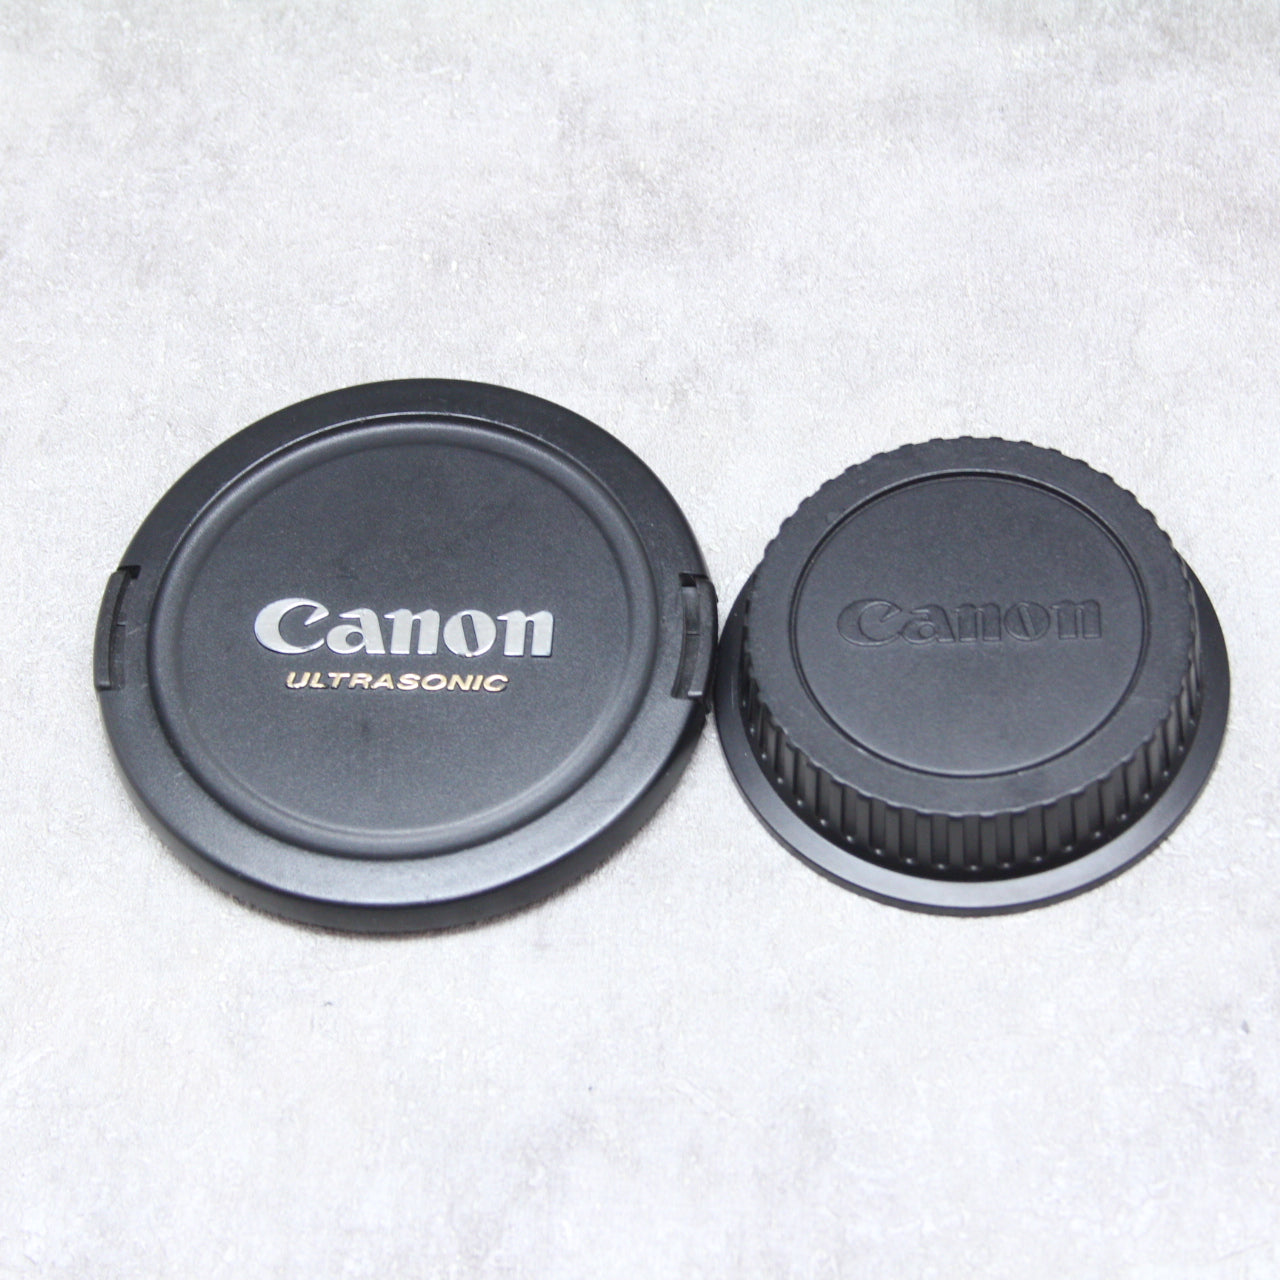 中古品 Canon EF70-200mm F2.8 L IS USM ※2月12日(日)のYouTube生配信でご紹介